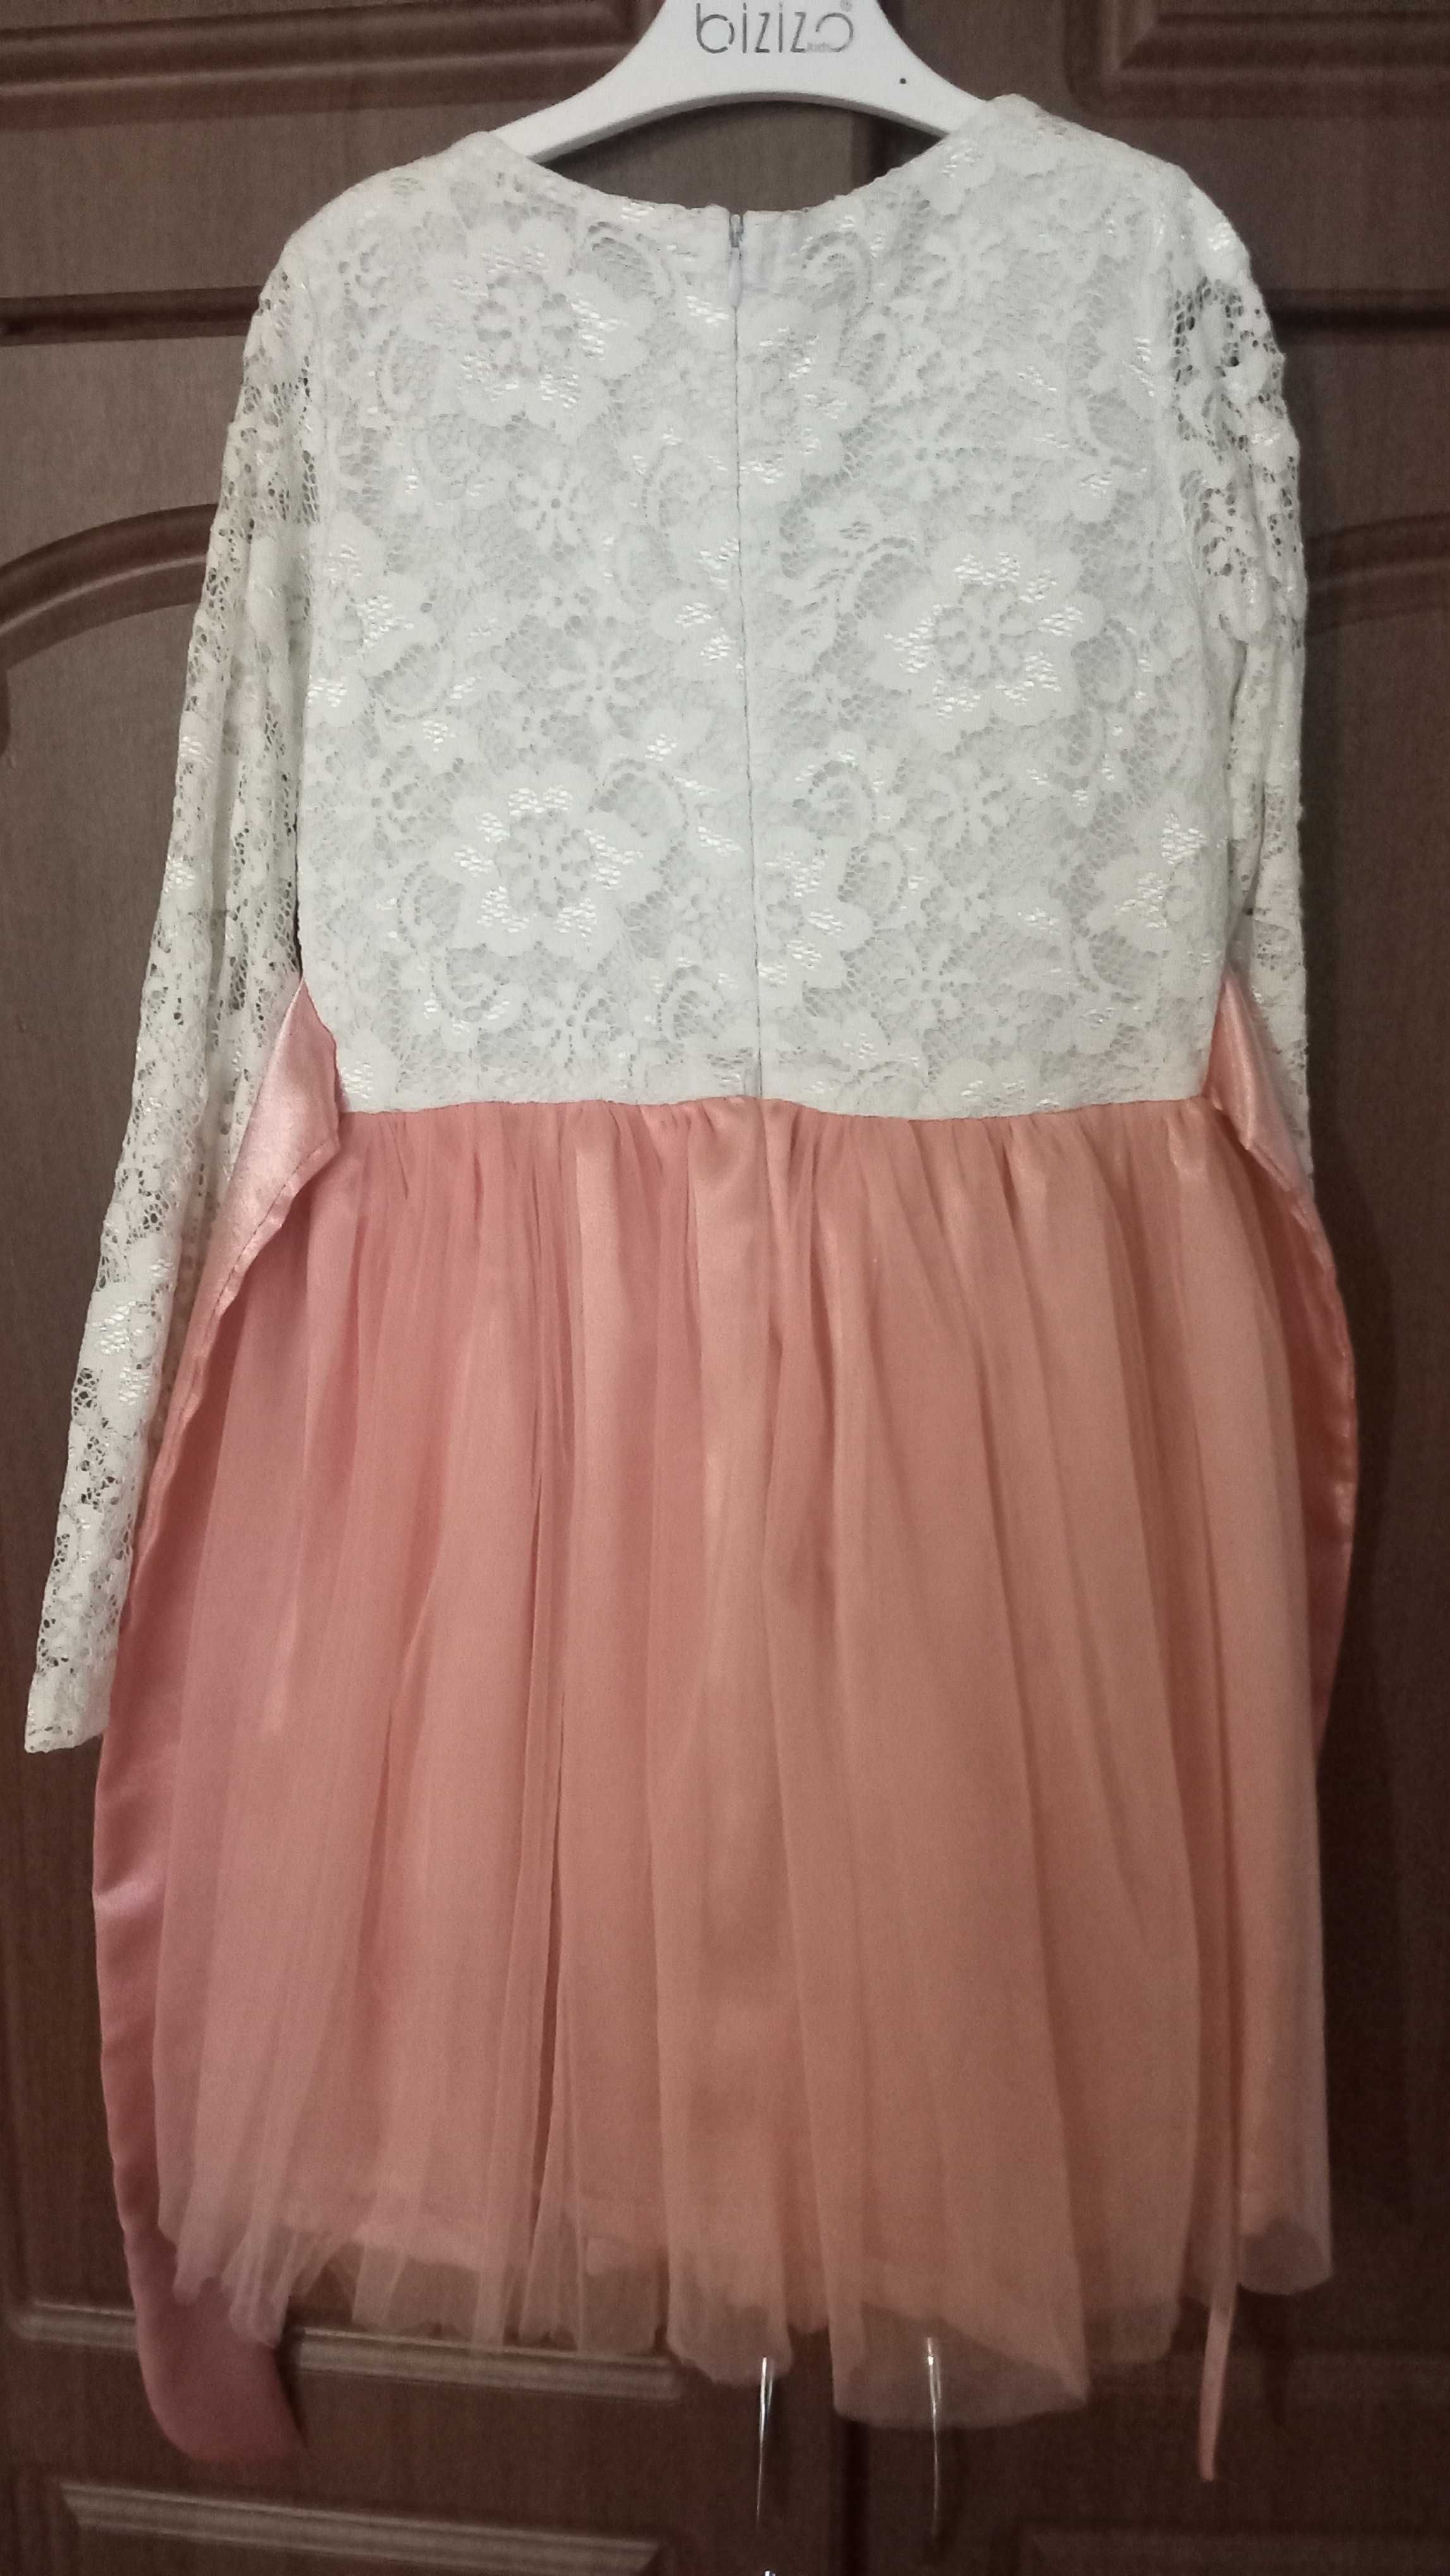 Святкова сукня 134, святкове плаття фатін гіпюр нове